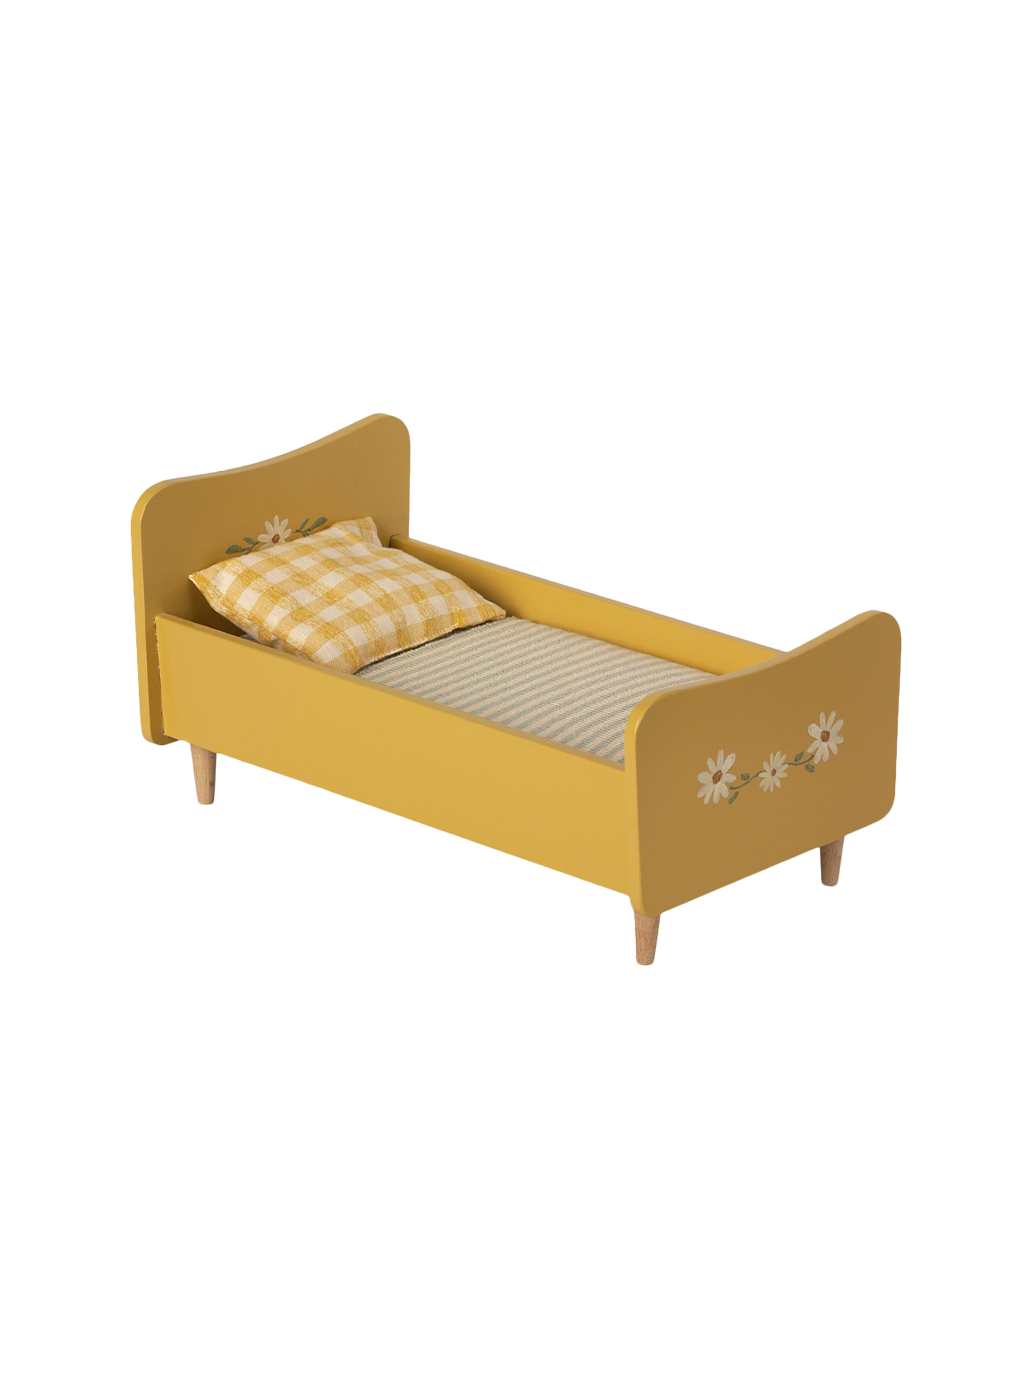 Mini-Kinderbett aus Holz mit Bettwäsche